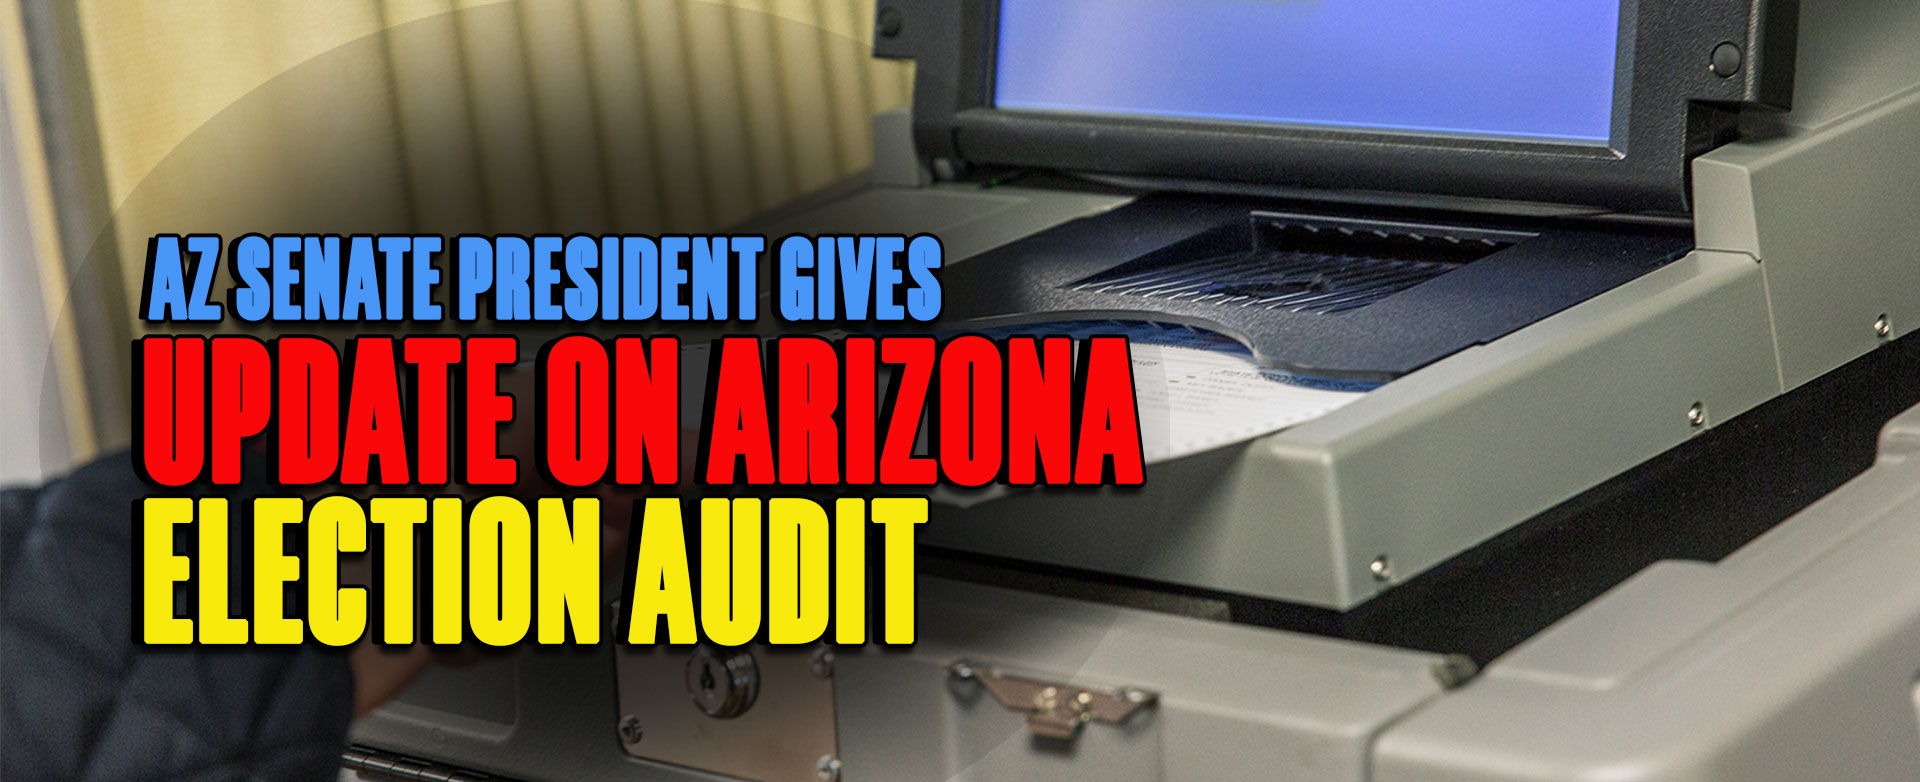 MyPatriotsNetwork-AZ Senate President Gives Update On Arizona Election Audit